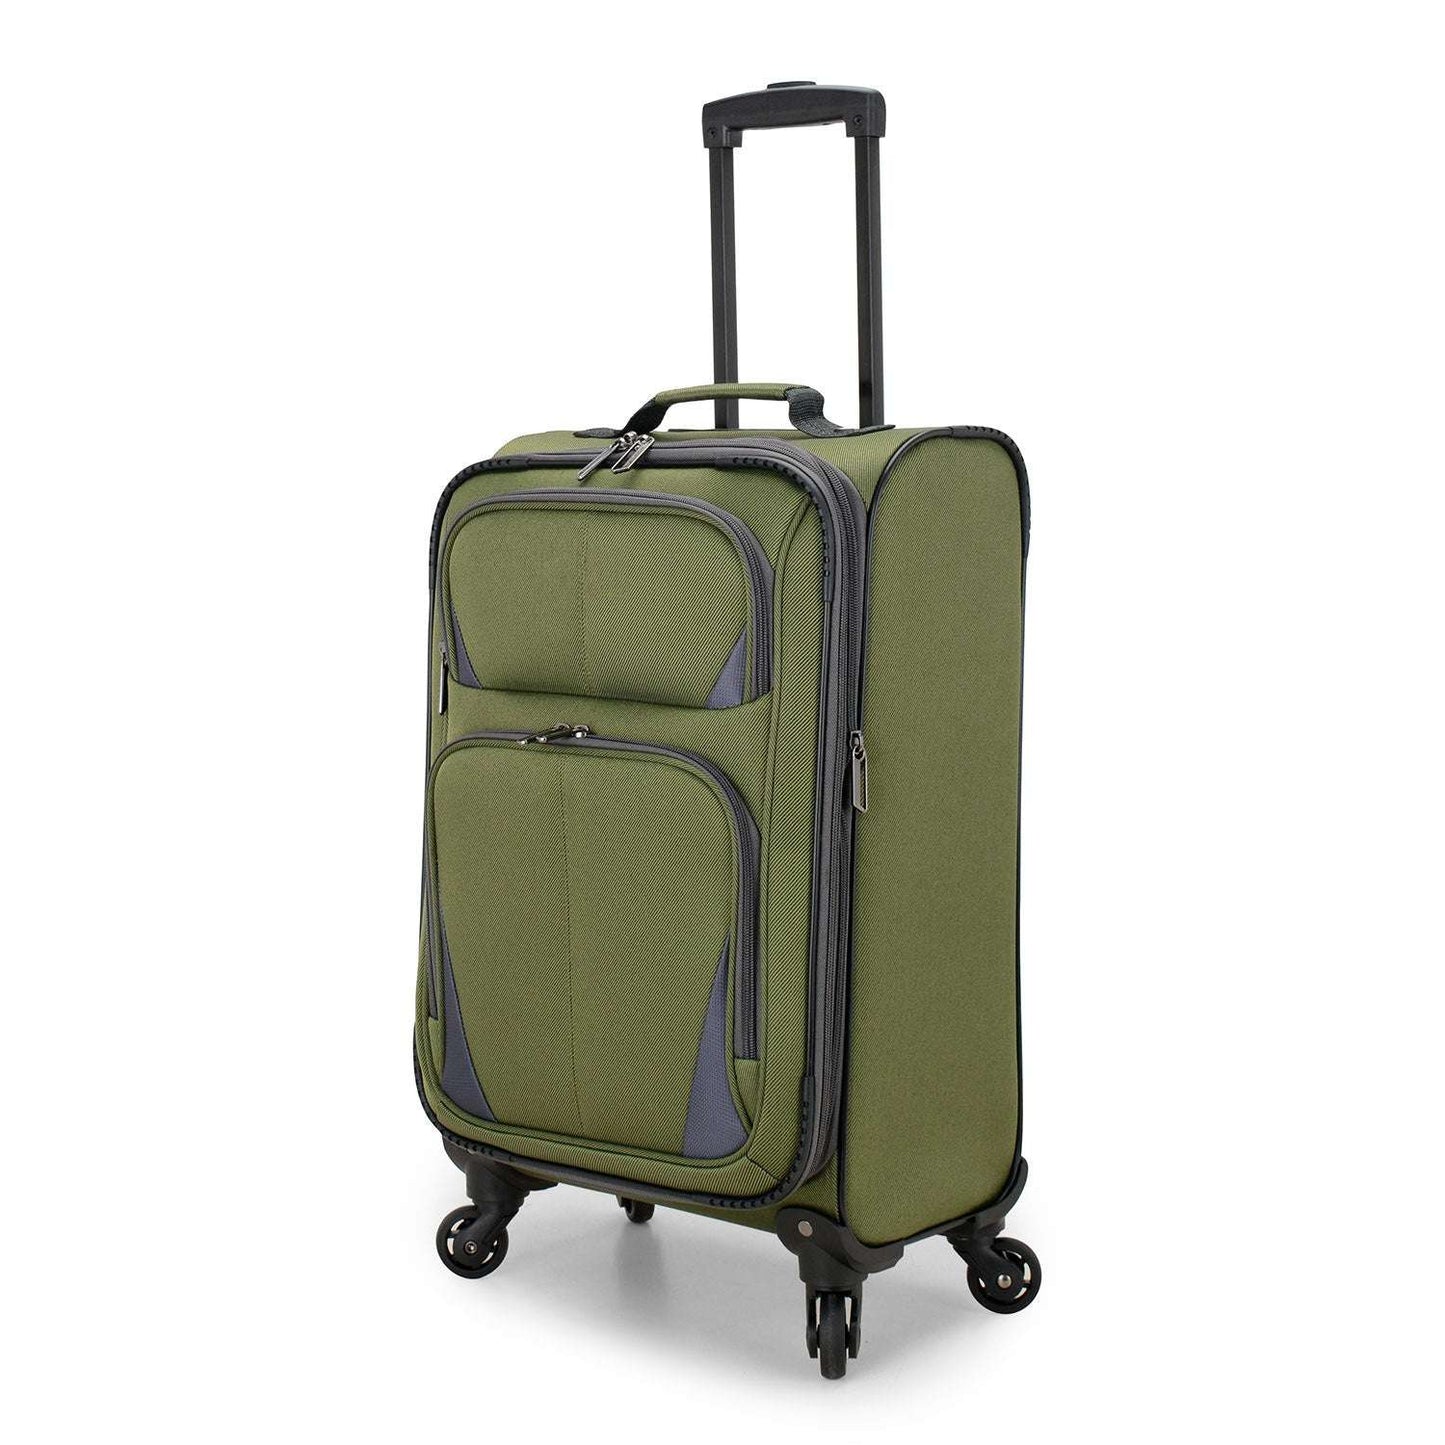 2 PC Softside Polyester Spinner Rolling Suitcase Luggage Set (14", 23") 66 OK•PhotoFineArt OK•PhotoFineArt